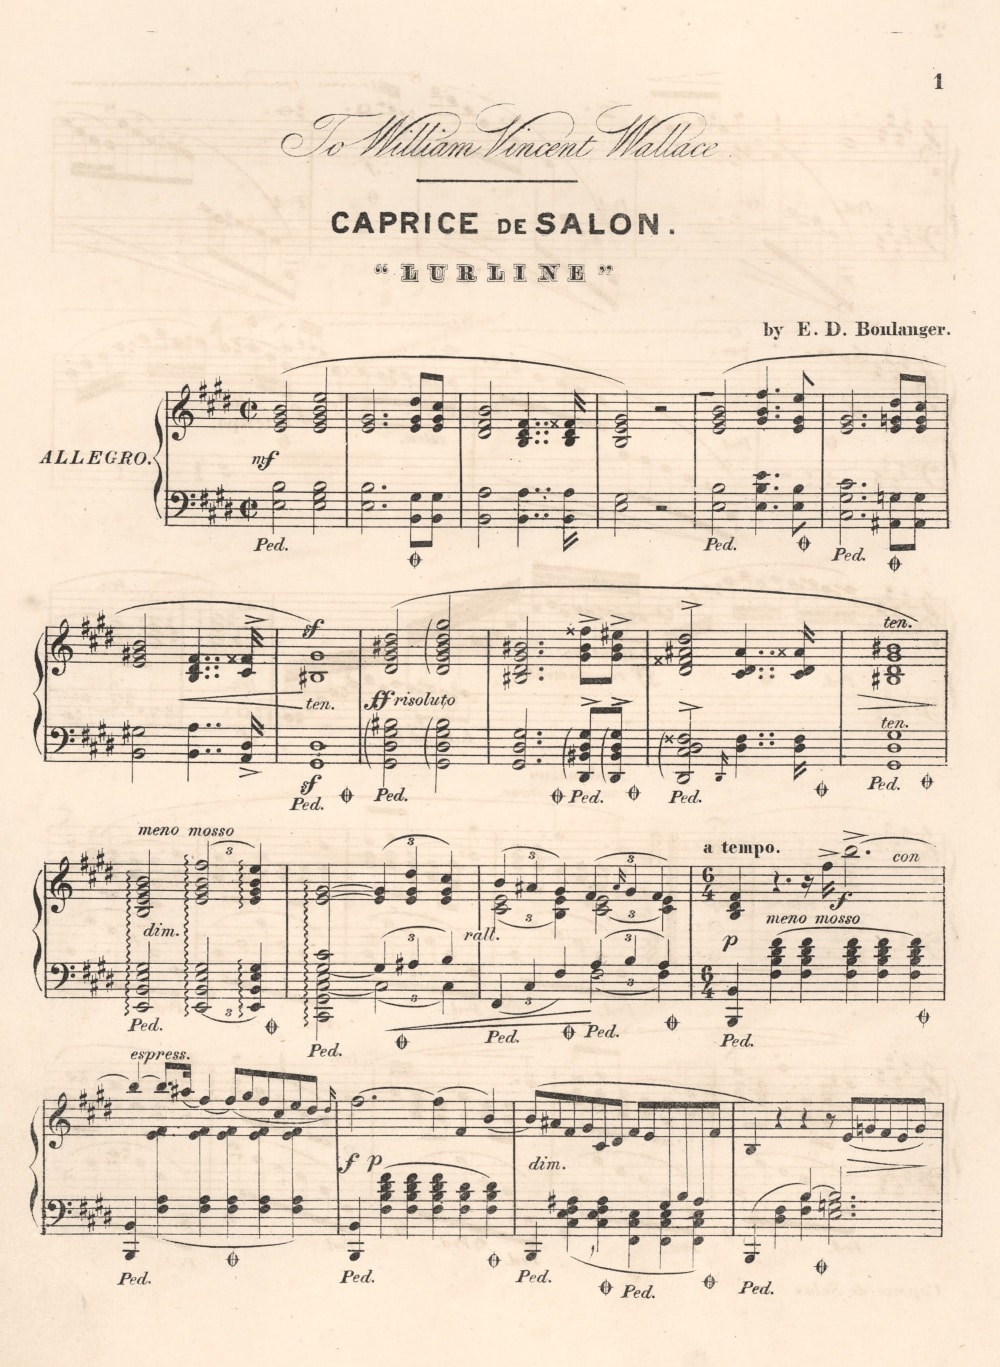 Lurline caprice de salon, by Boulanger (Sydney: Clarke, [1862])